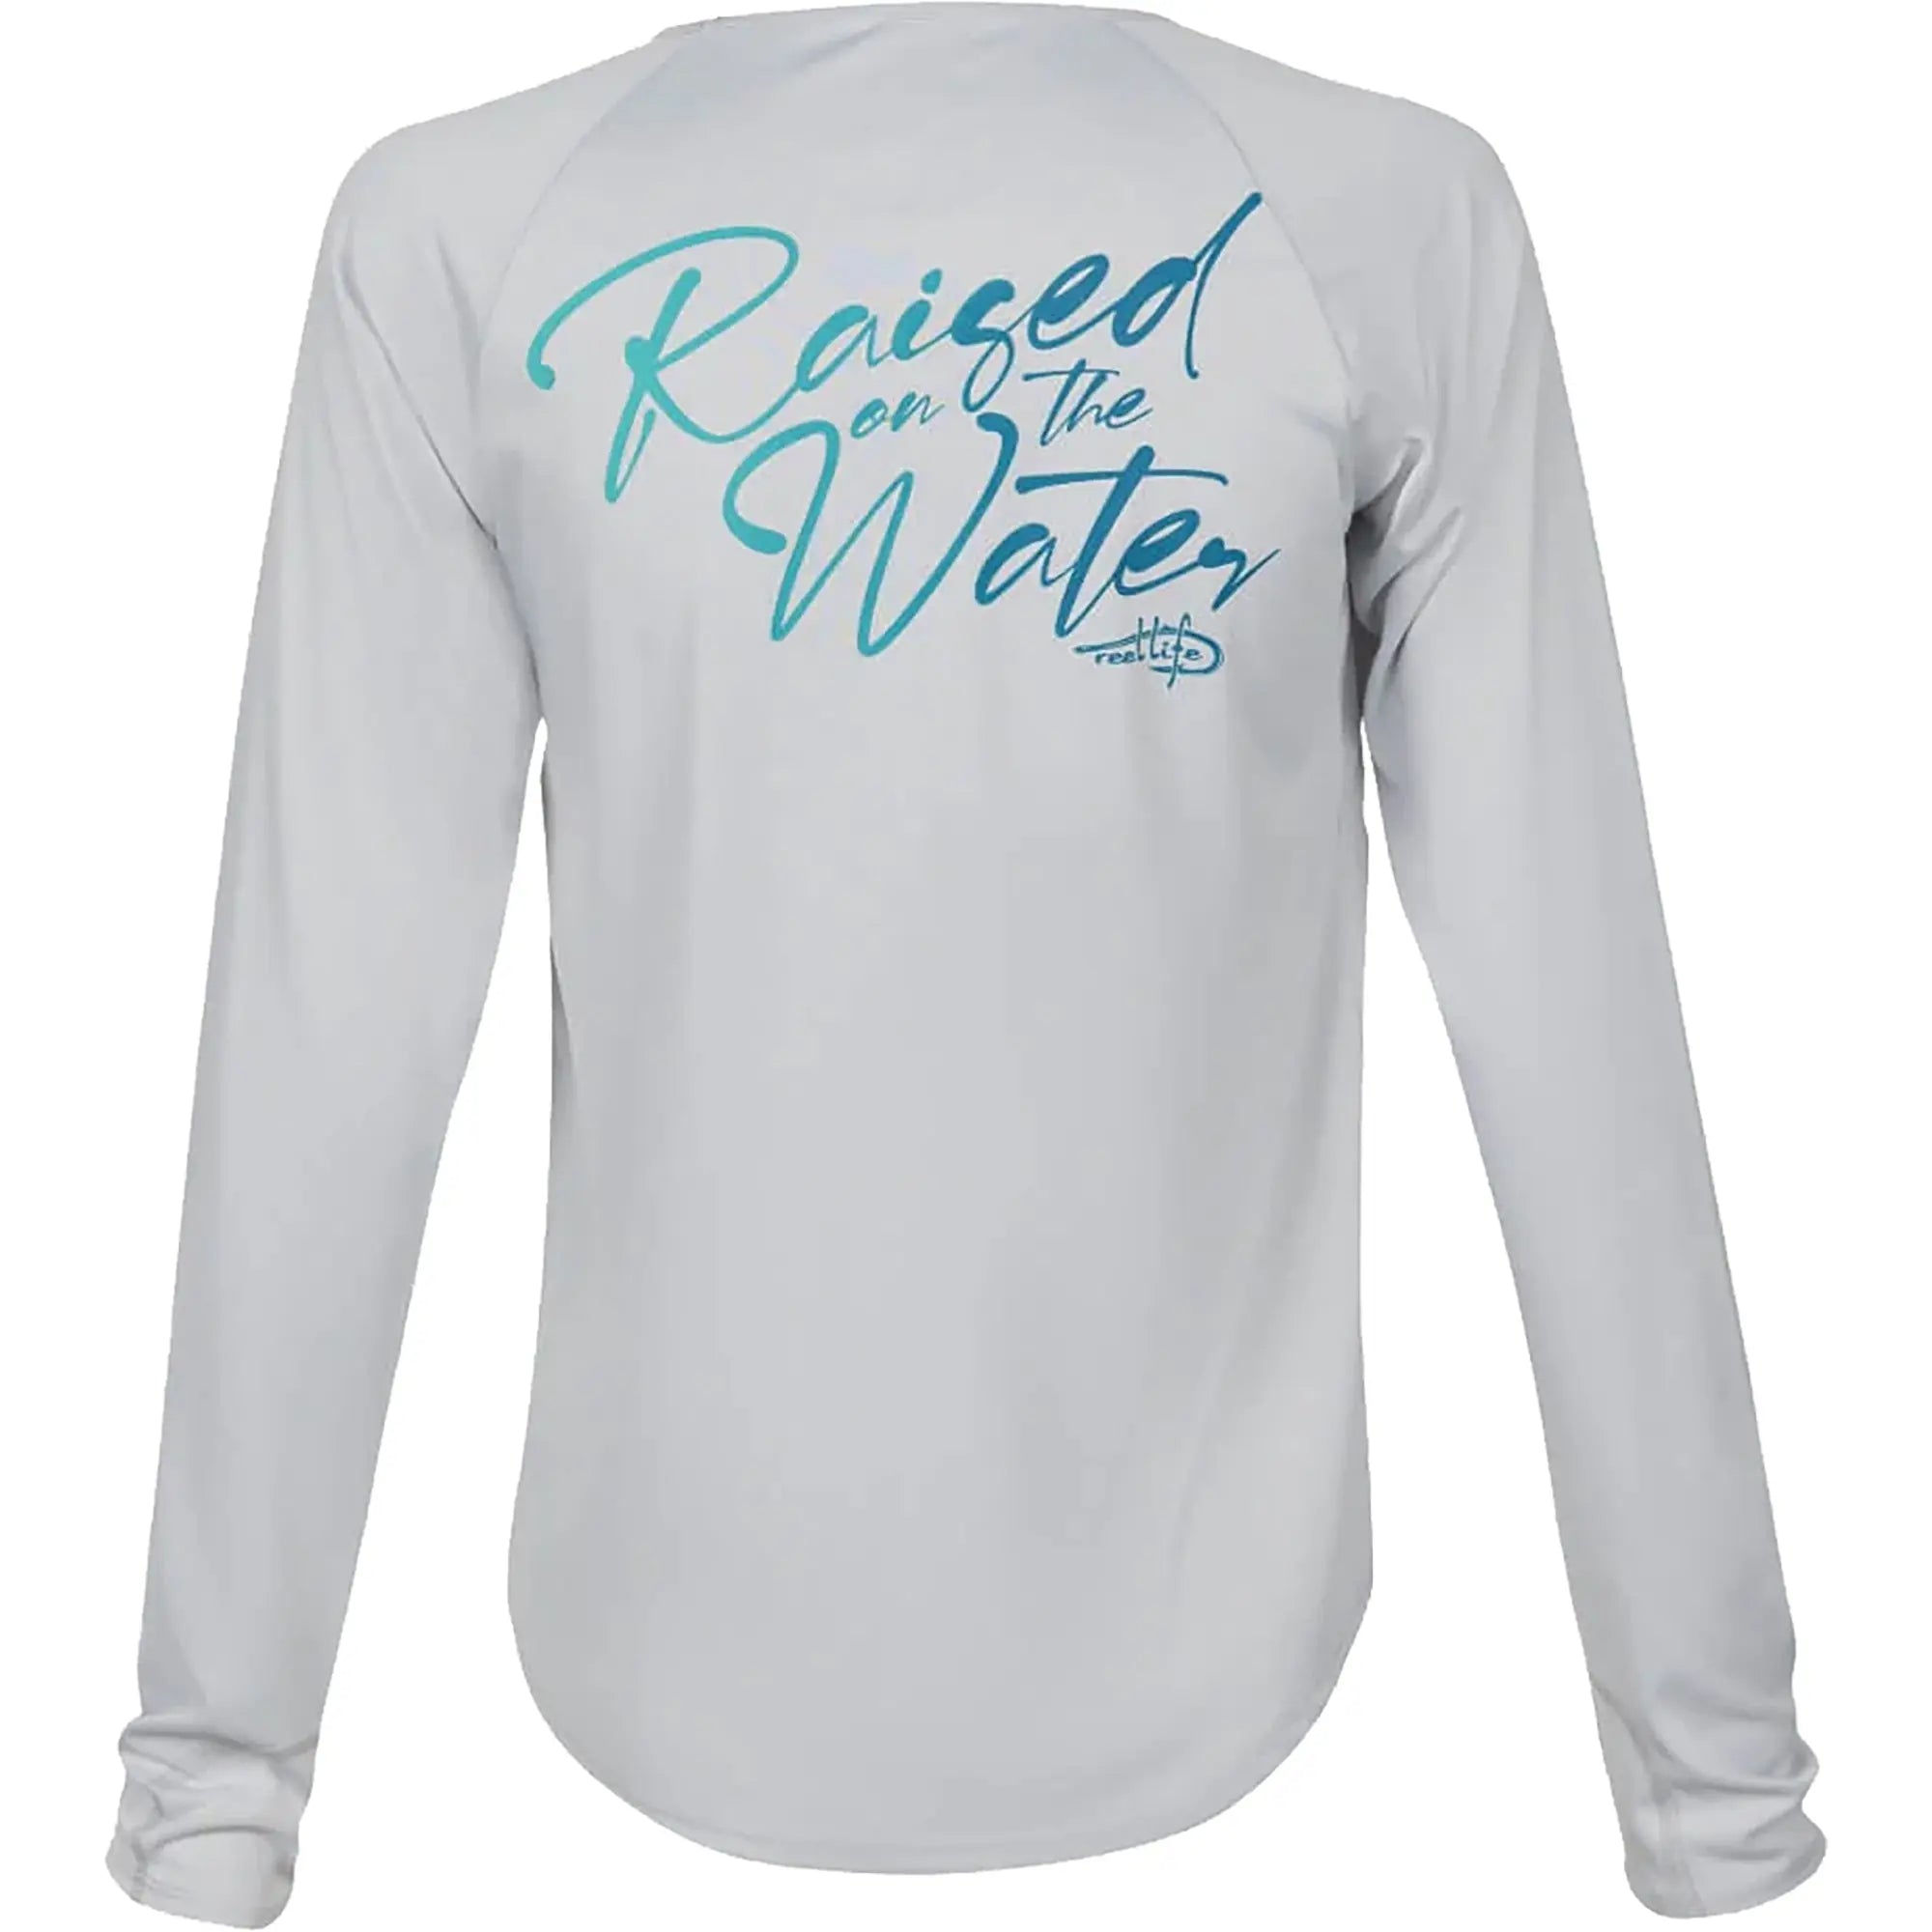 Reel Life Women's Mangrove UV Long Sleeve T-Shirt - Glacier Gray Reel Life